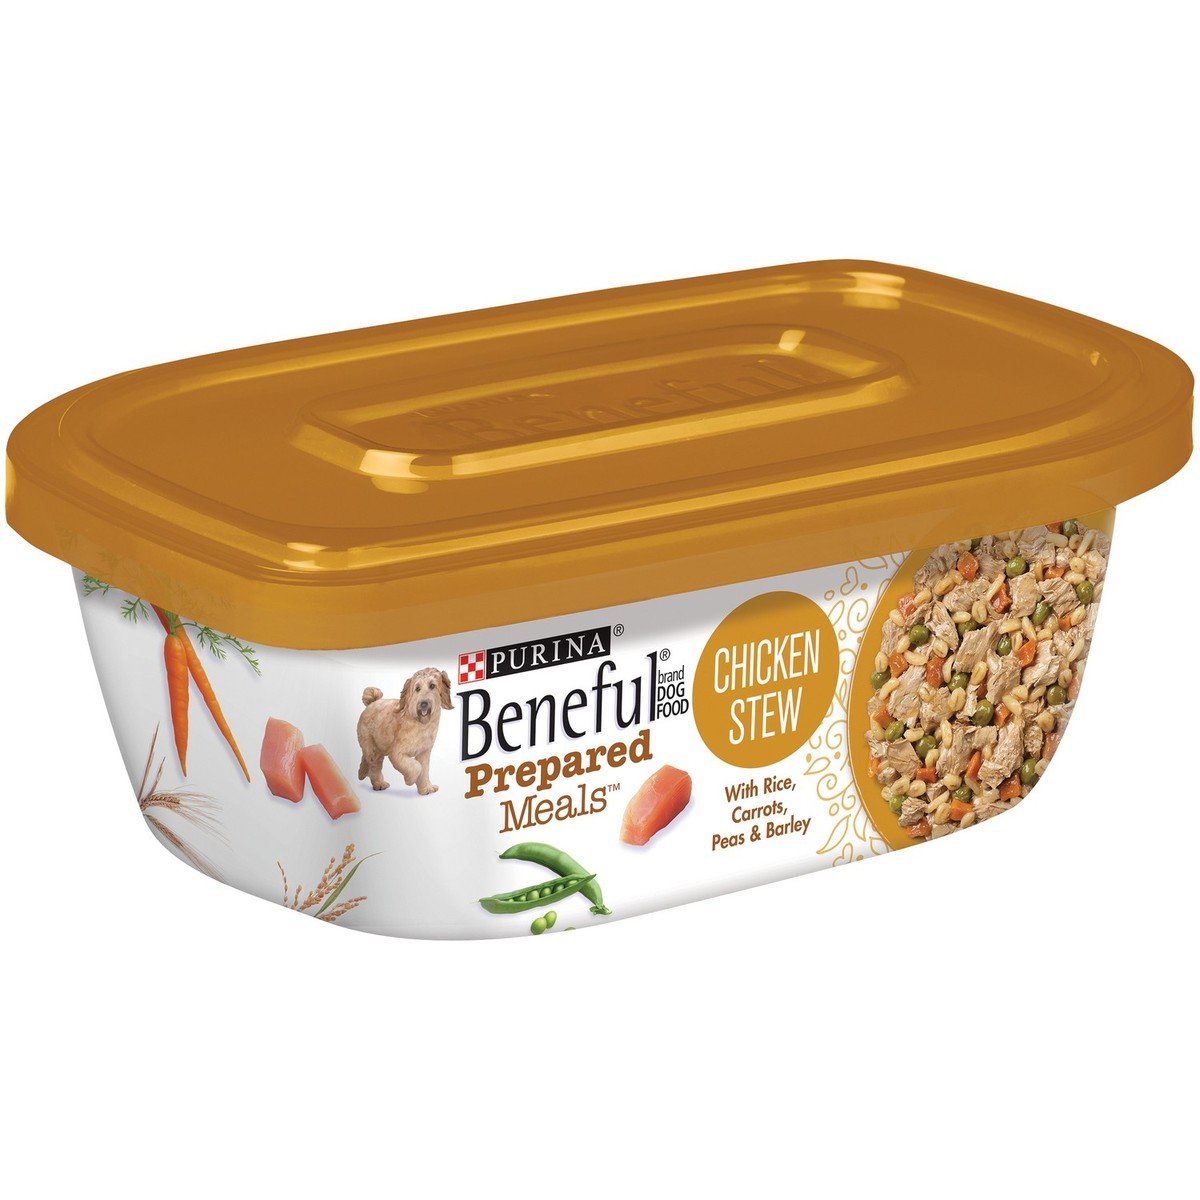 Purina Beneful Prepared Dog Food Meal Chicken Stew Tub 283 g